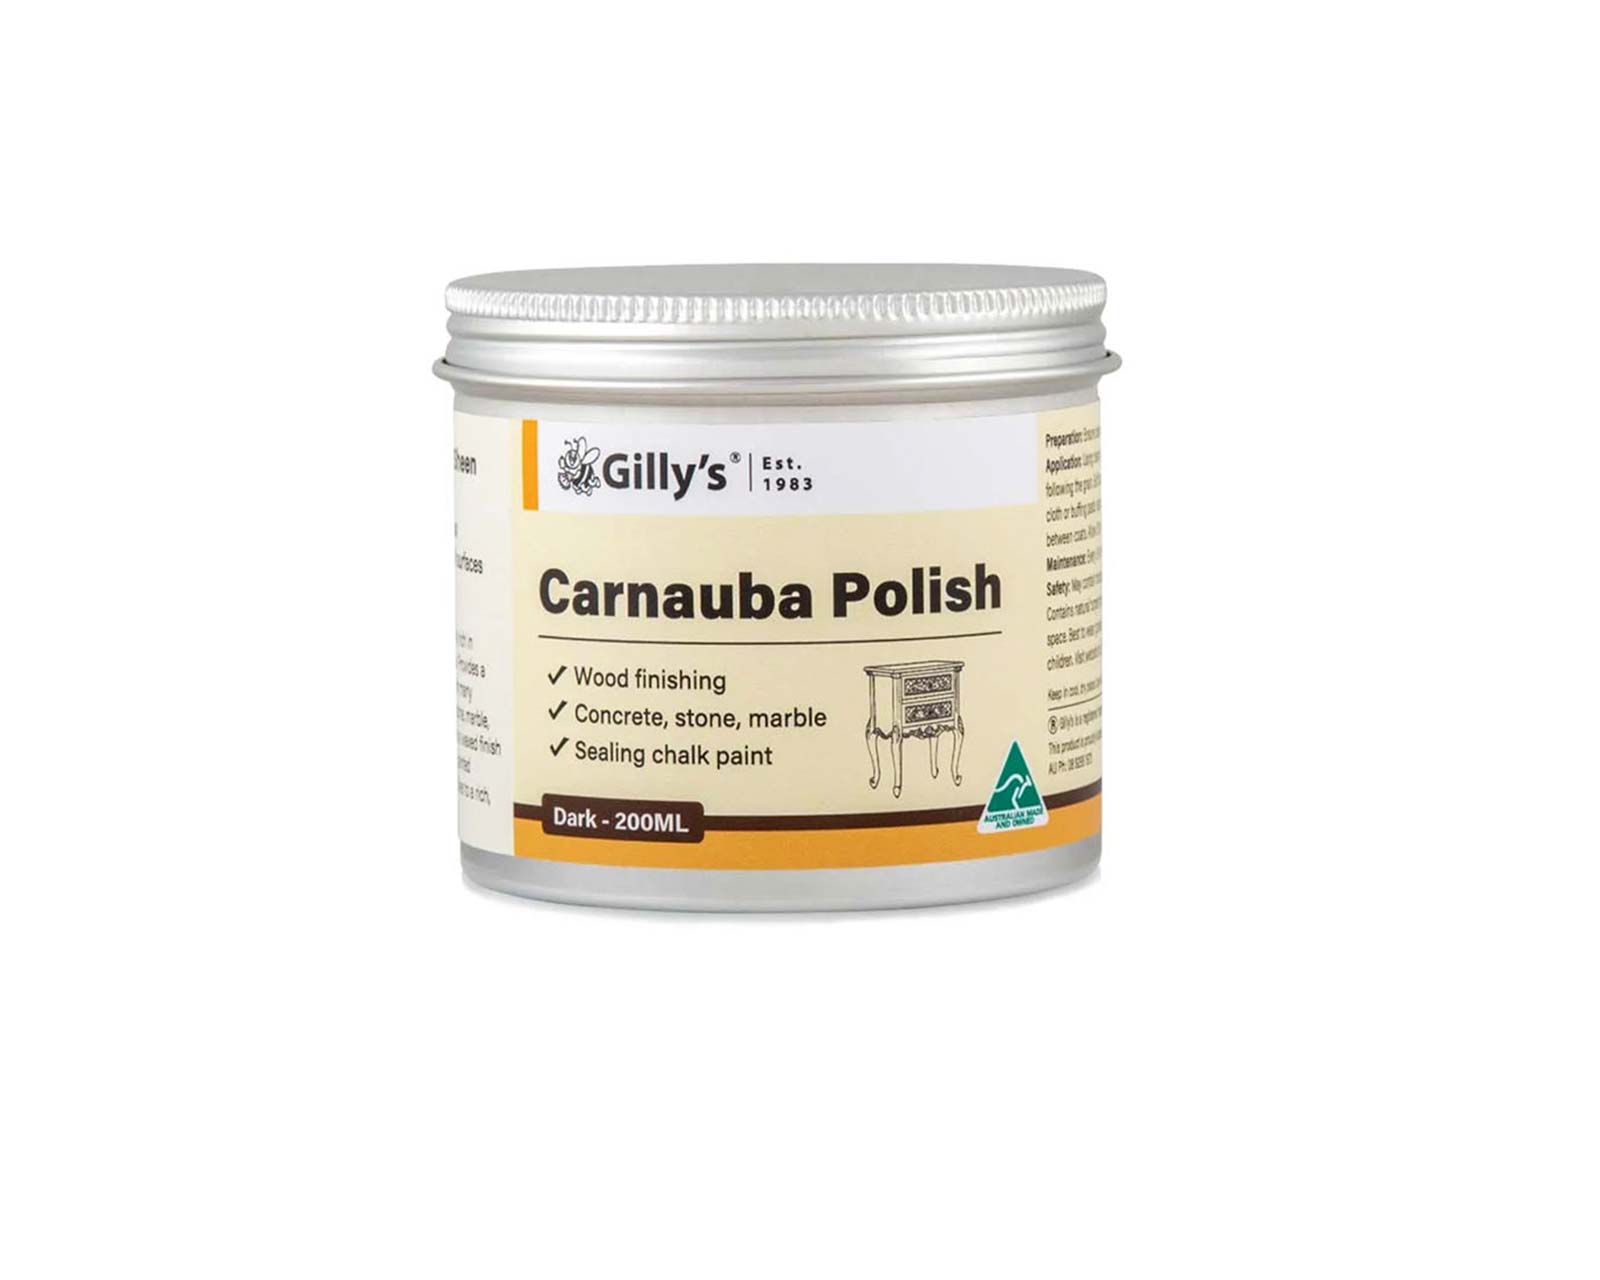 Carnauba Polish - Dark - 200ml - Gilly's ®